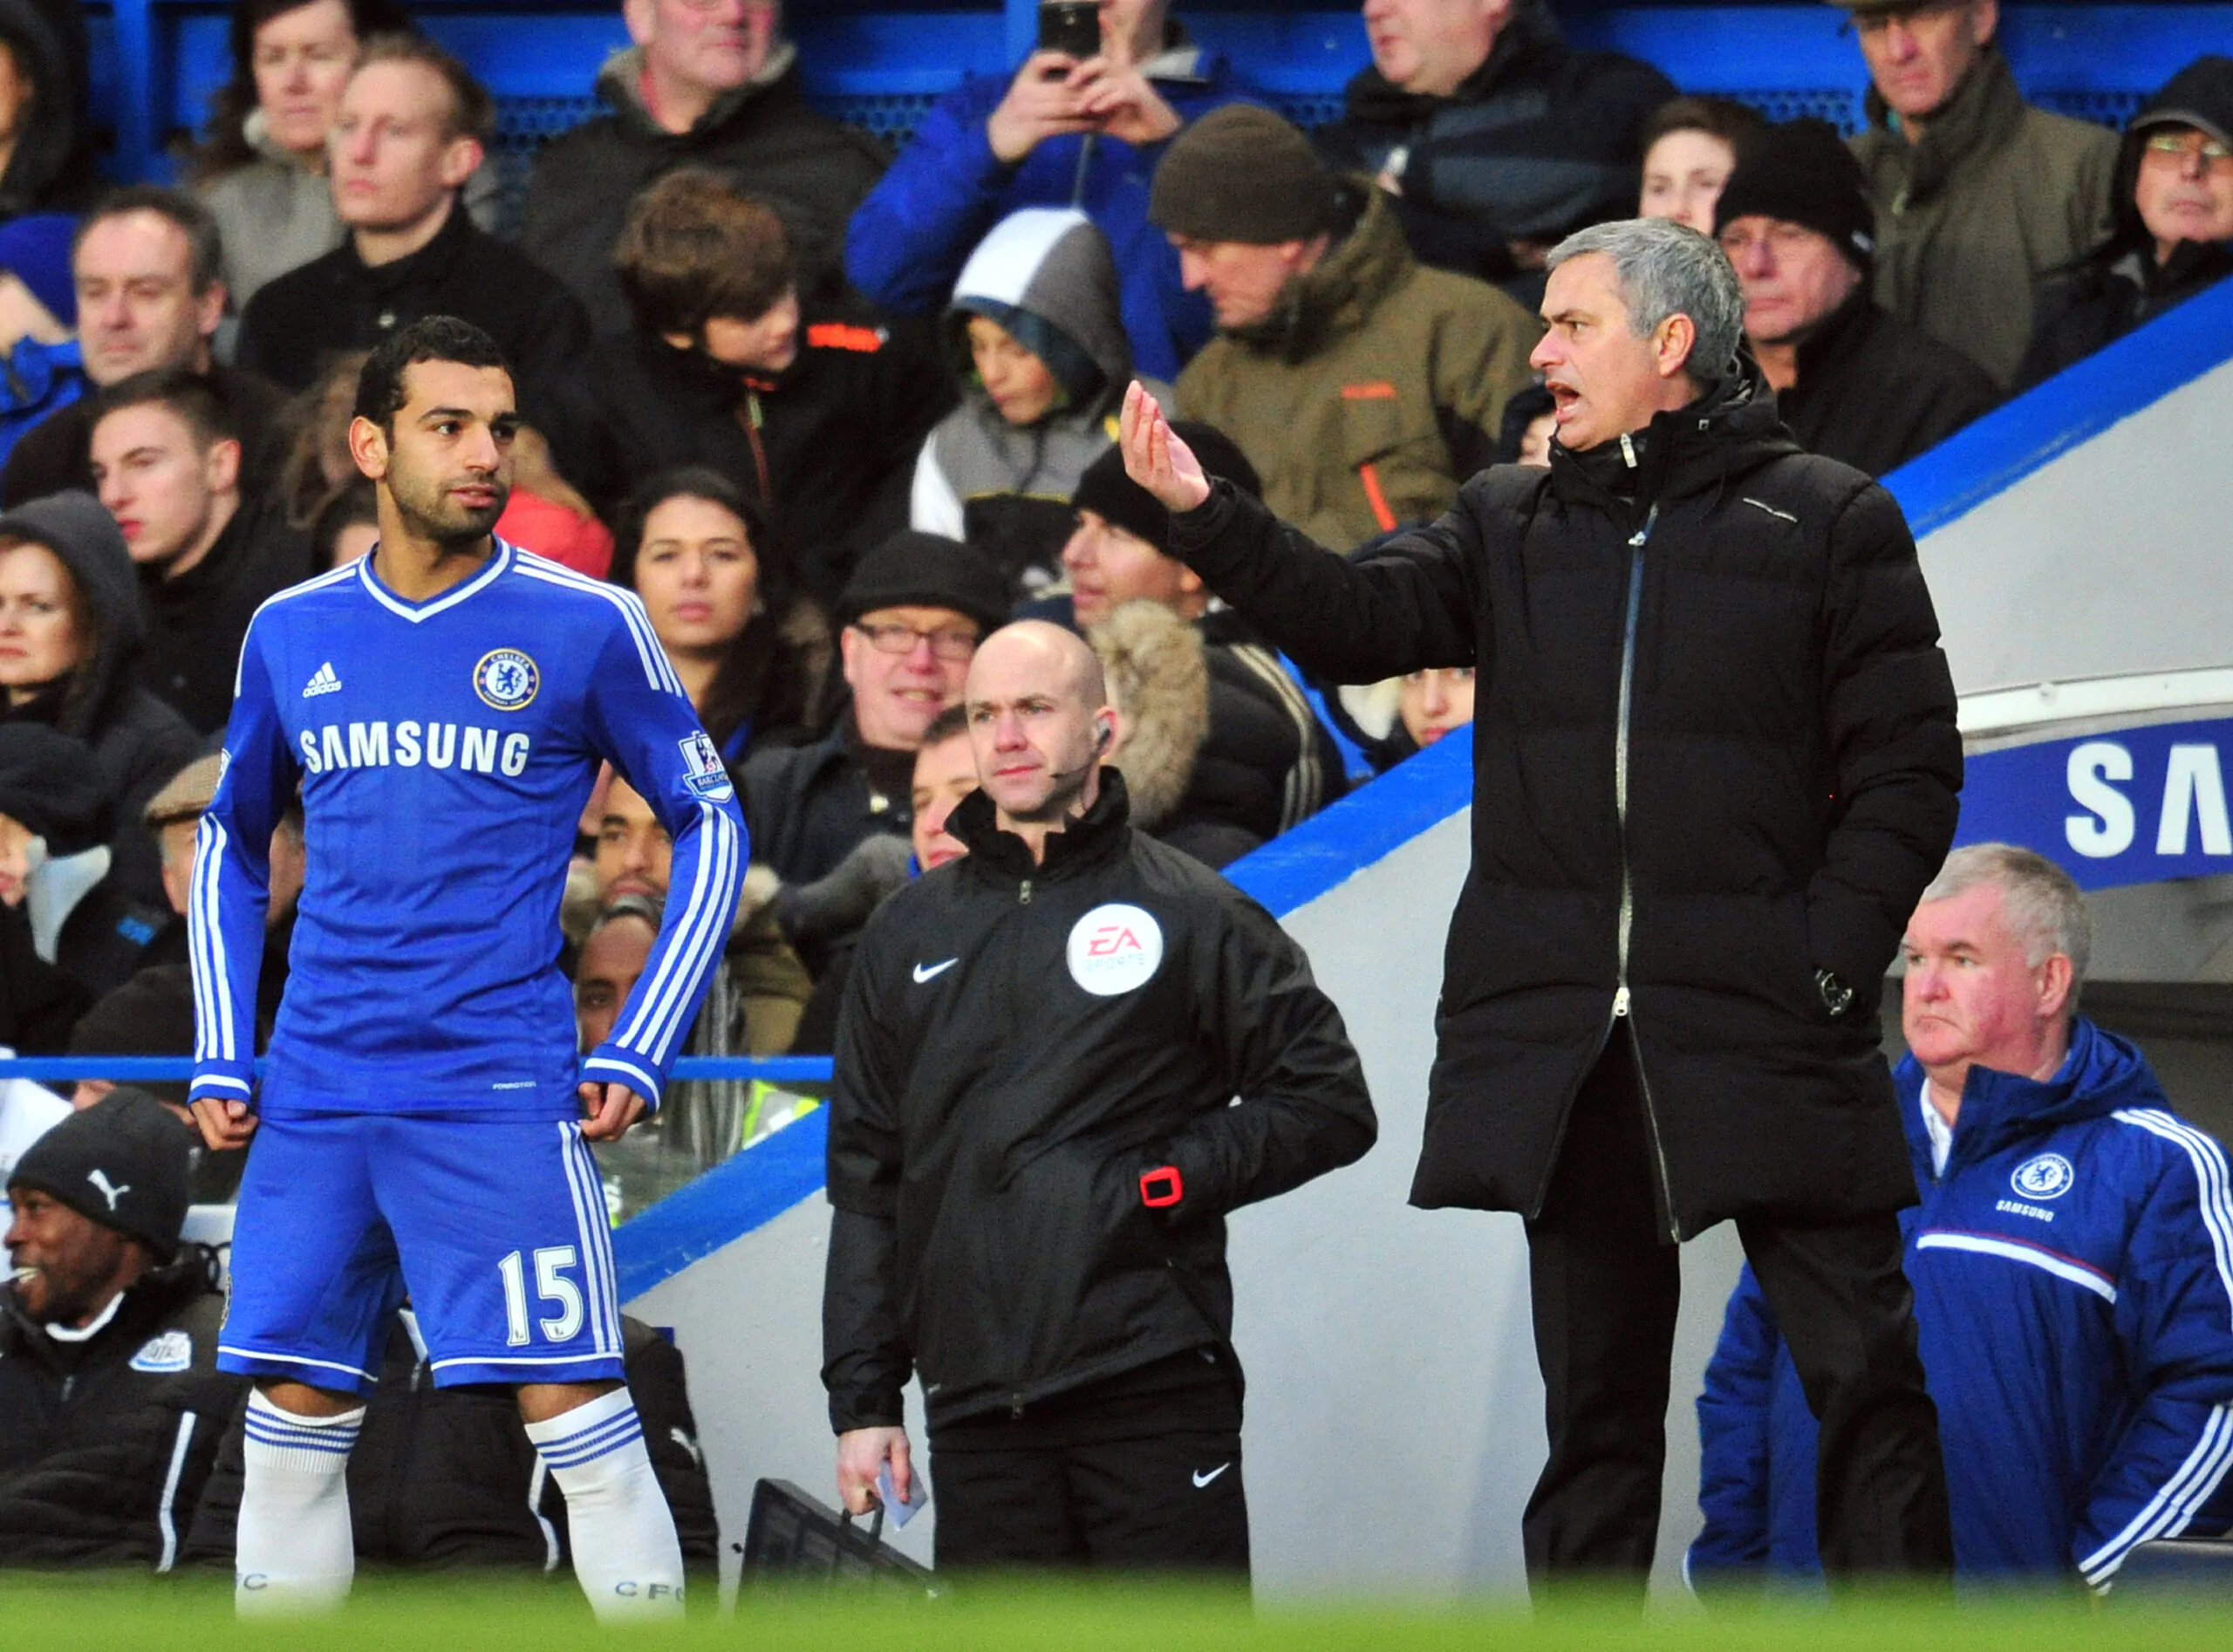 L’ex Chelsea svela un retroscena: “Mourinho aggredì Salah e lo fece piangere”